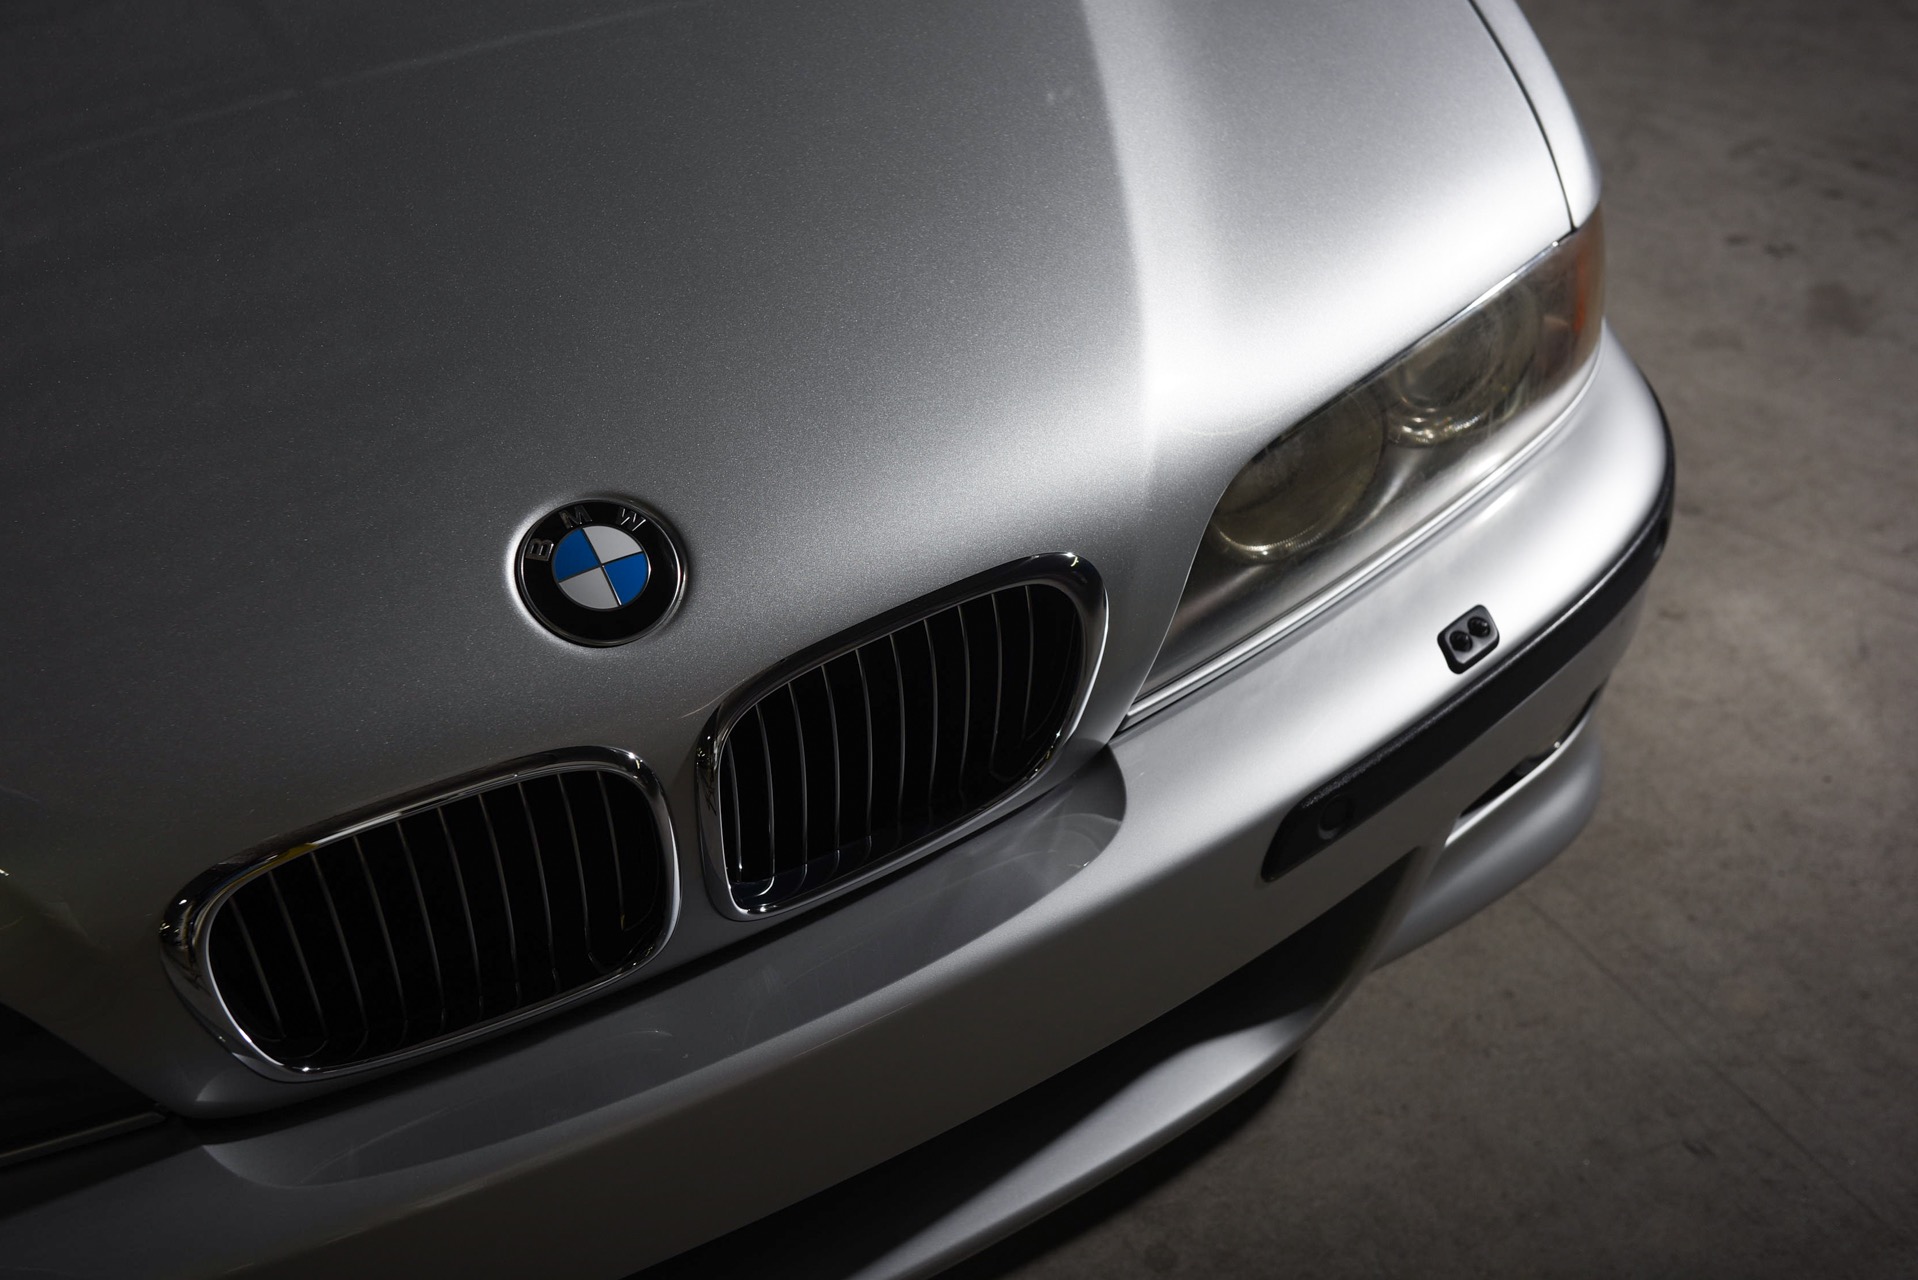 Used 2003 BMW M5 For Sale (Sold)  Ryan Friedman Motor Cars LLC